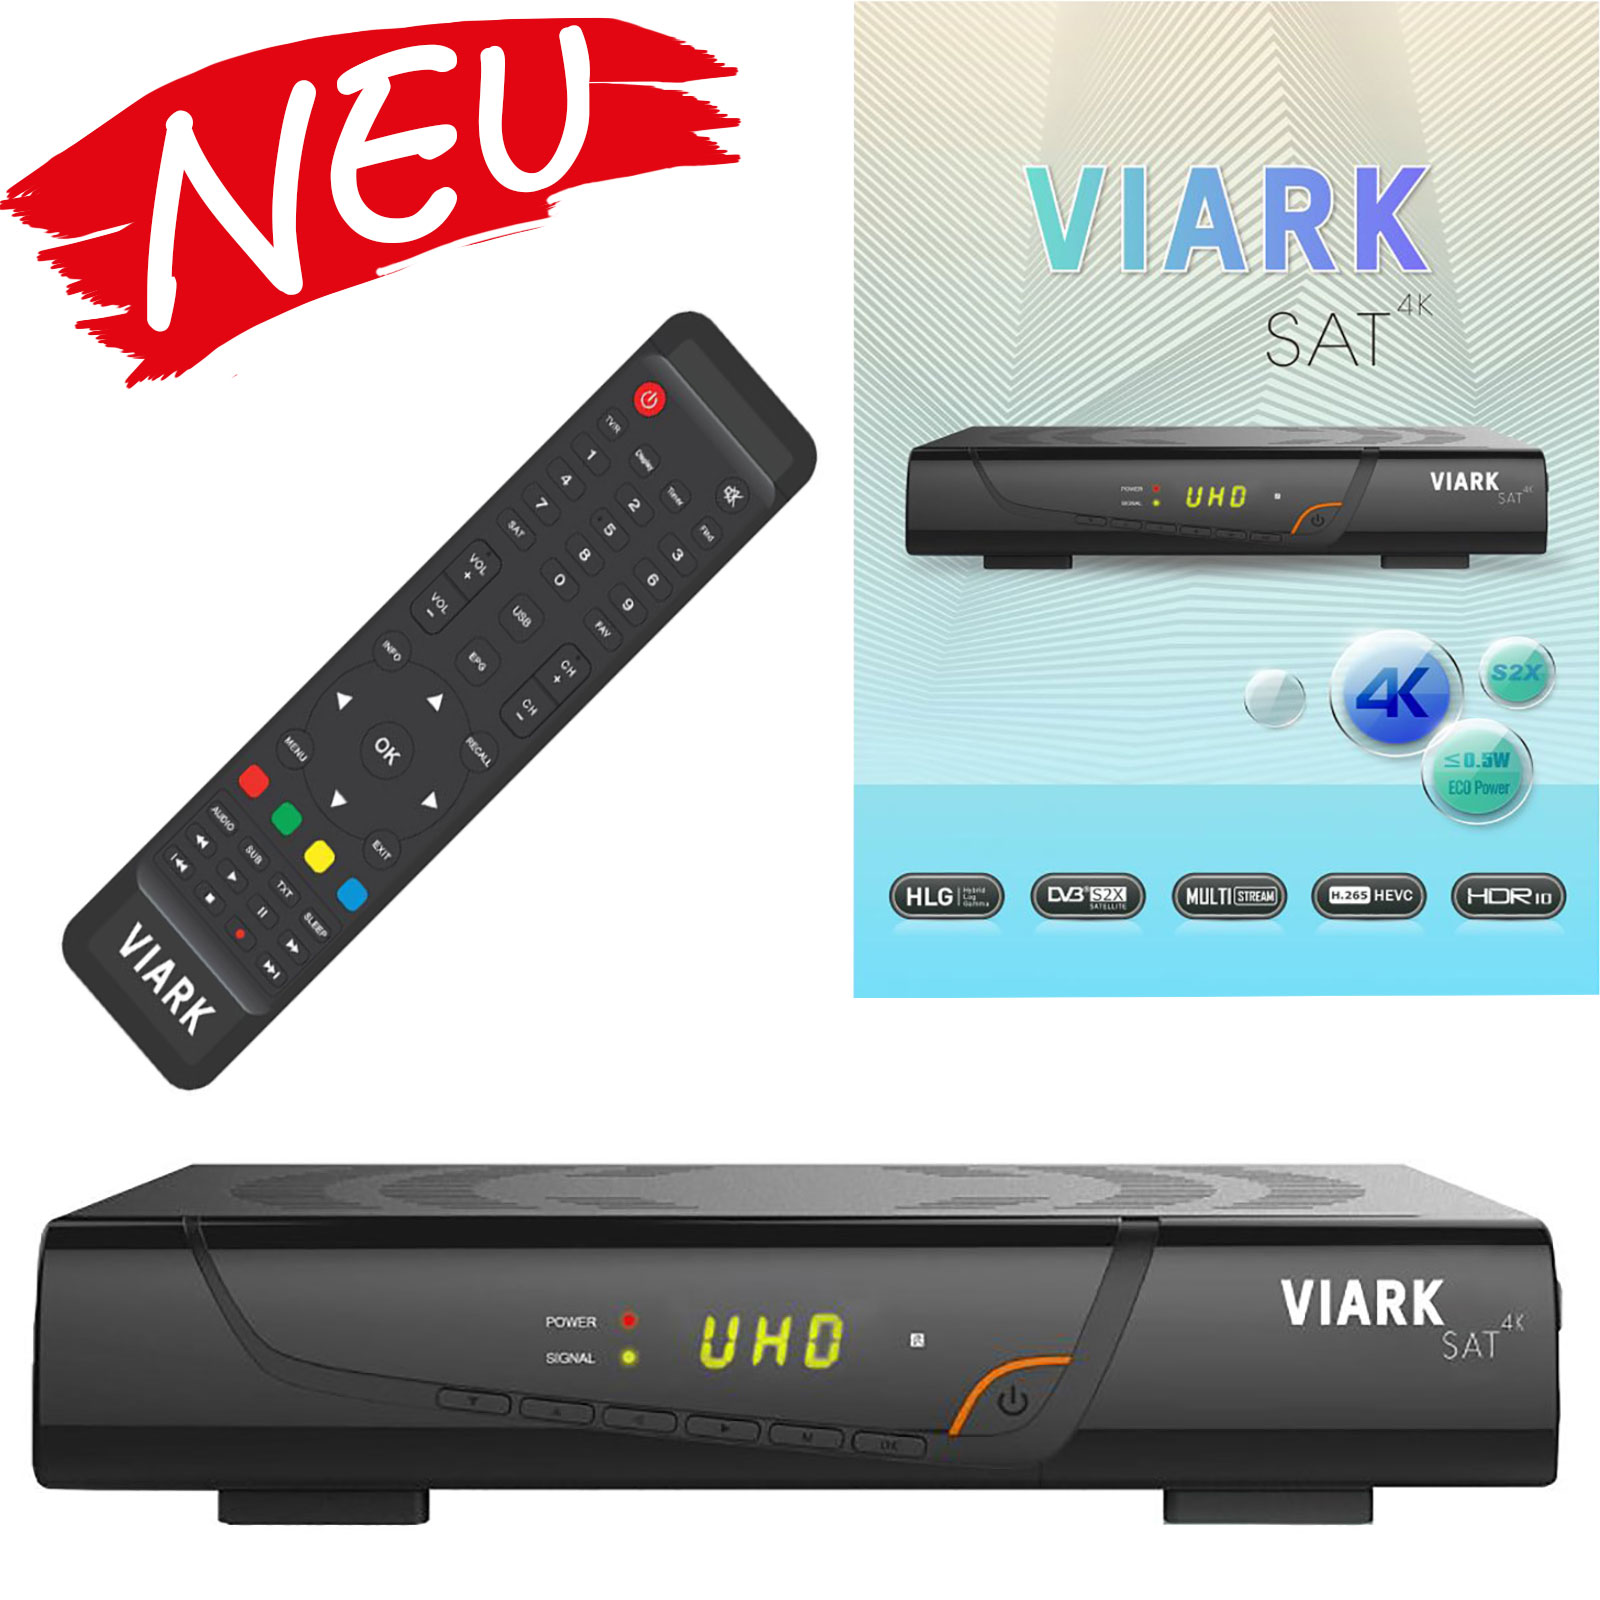 VIARK SAT 4K UHD 2160p DVB-S2X Multistream Sat Receiver H.265 USB WLAN